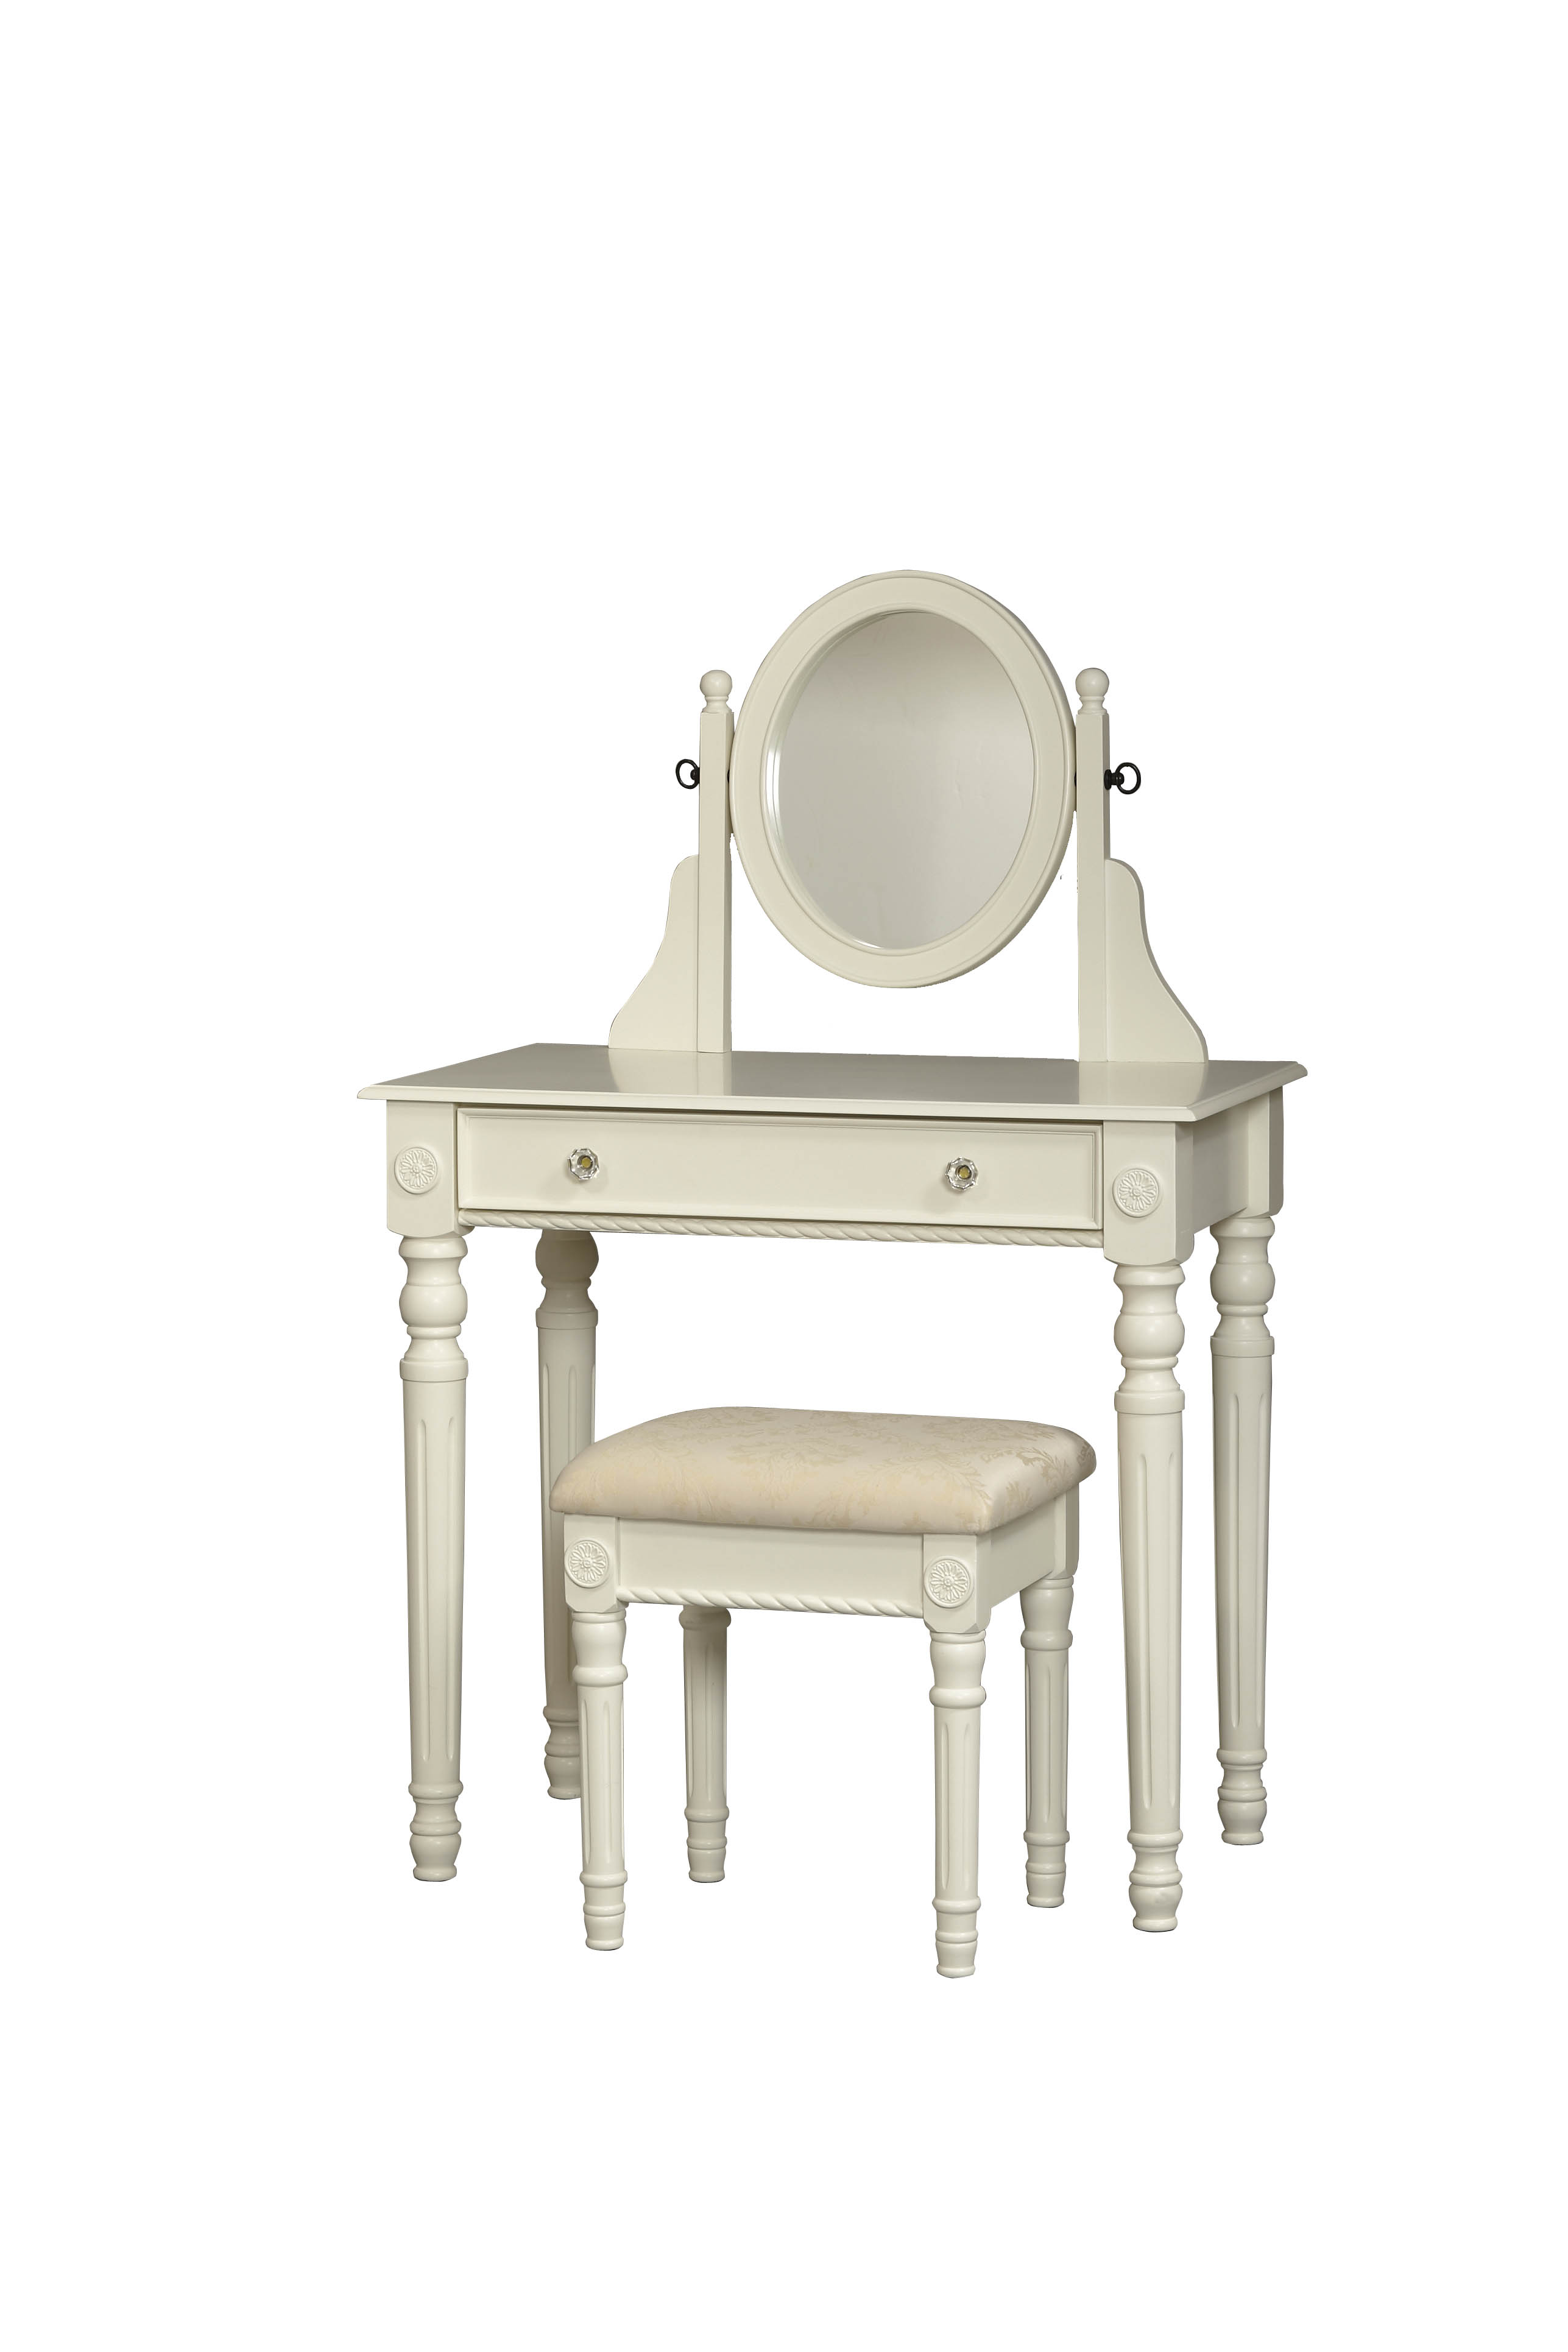 Furnituremaxx Lorraine Wood Vanity Set - White (Vanity Table w/ Bench)